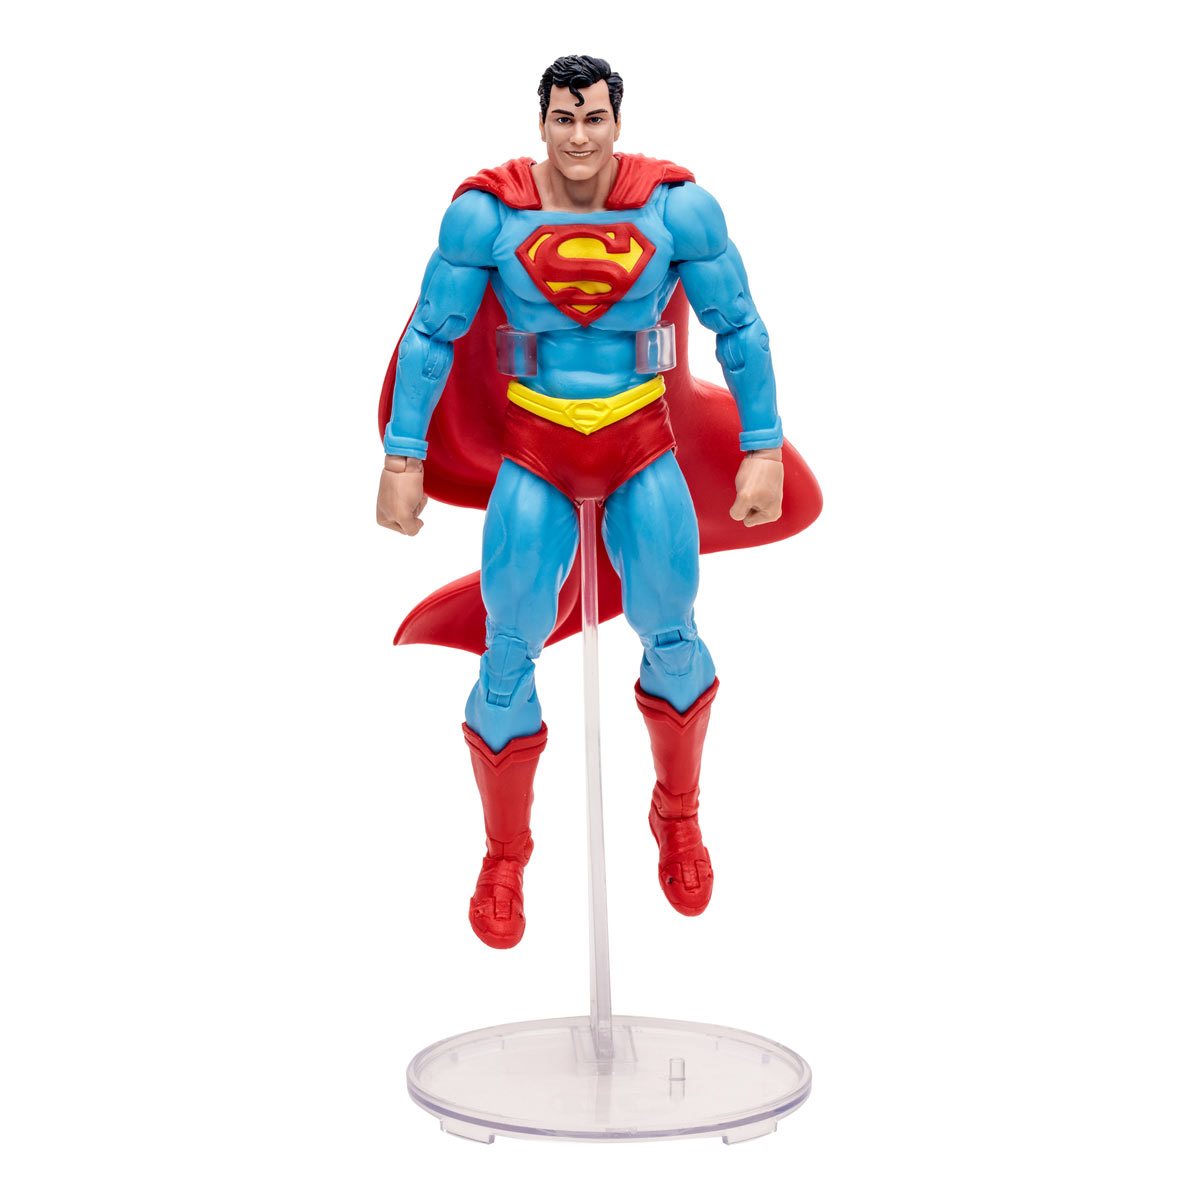 Superman DC Classic Figure By McFarlane